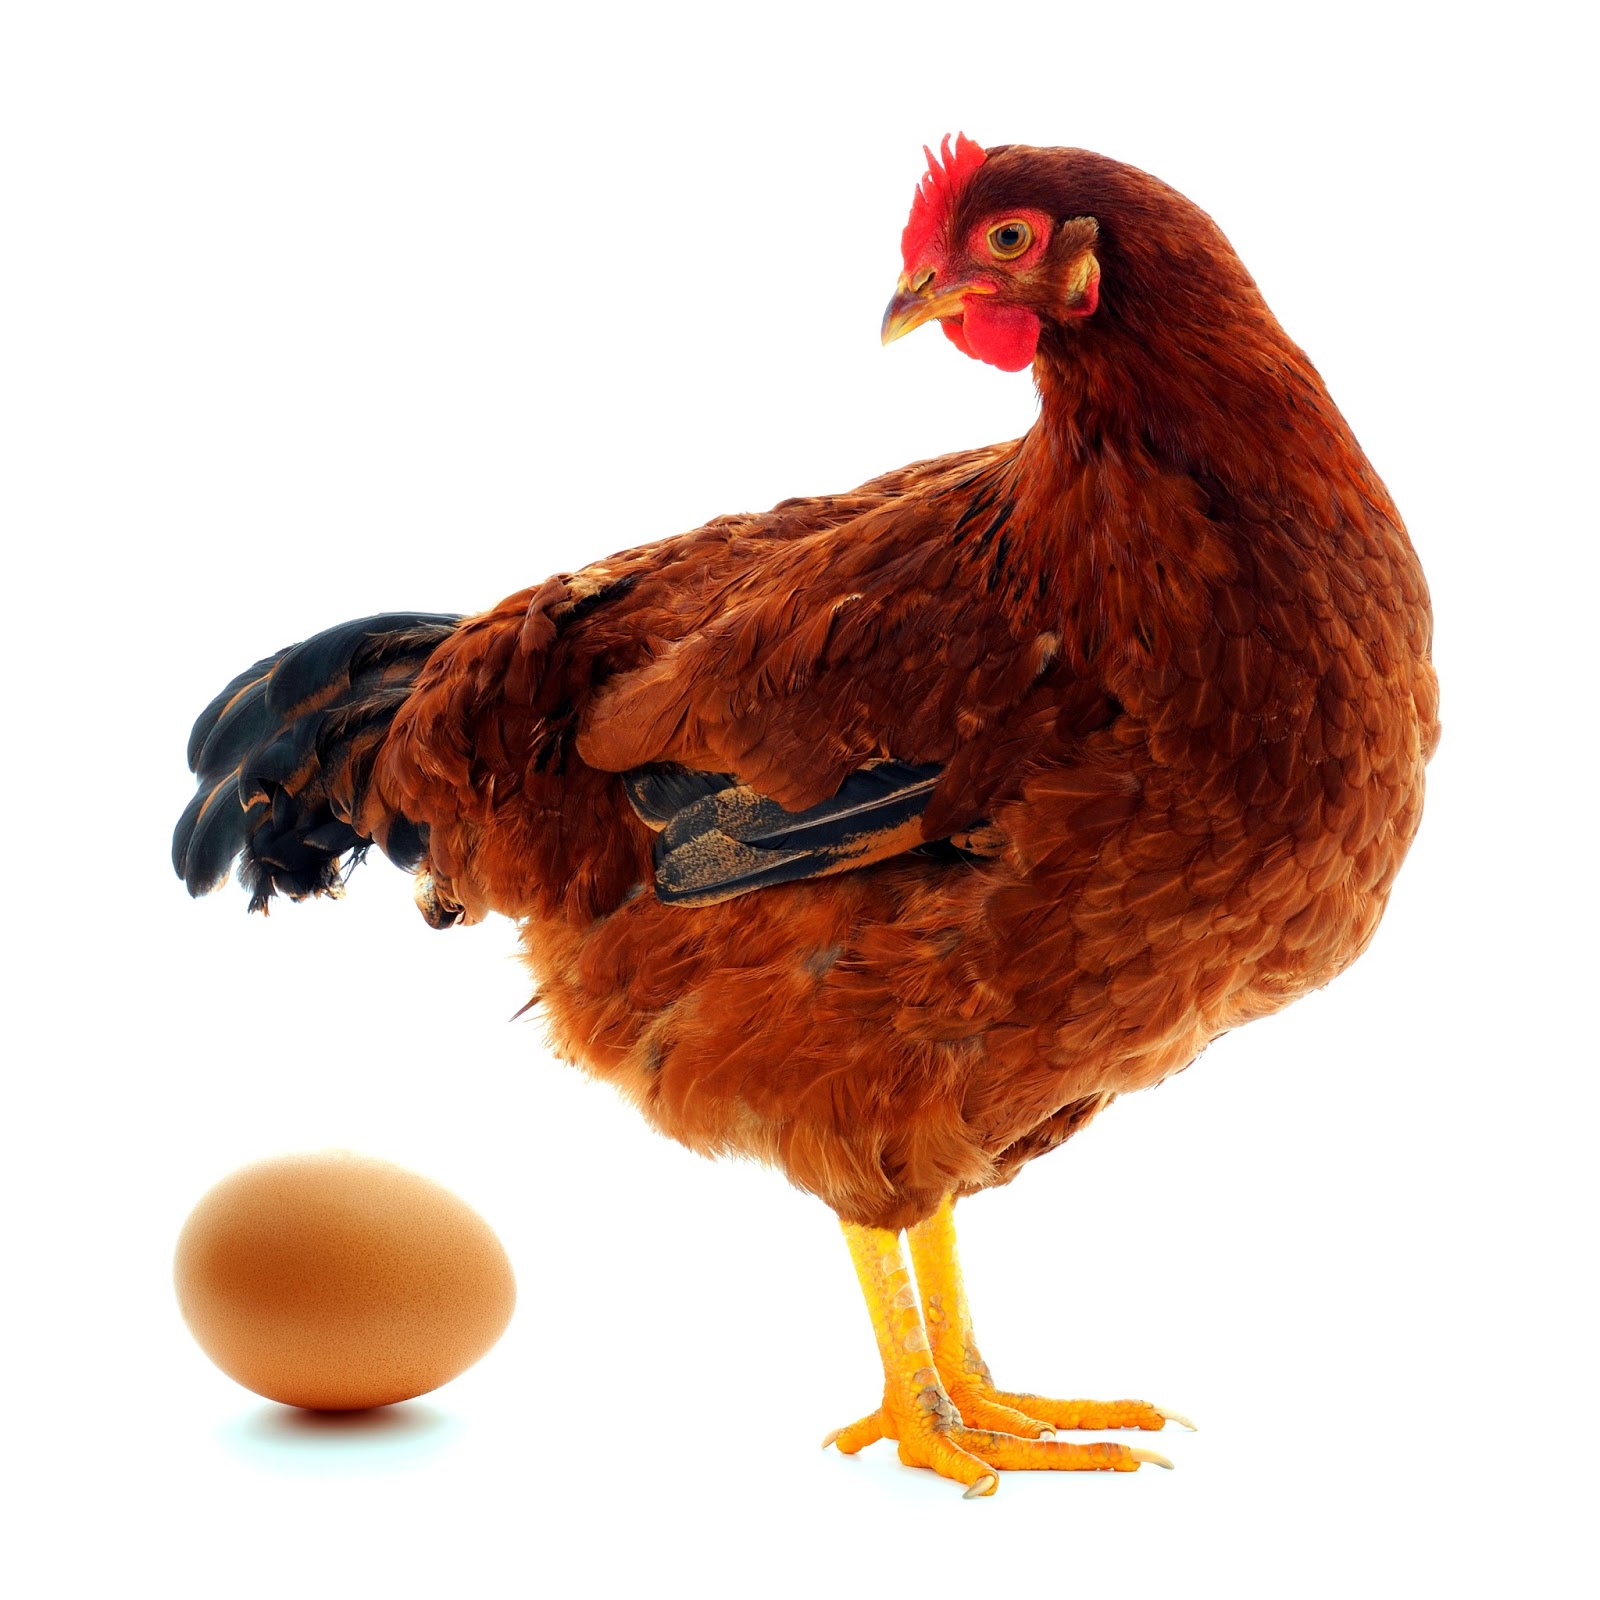 Duluan Mana Ayam  atau Telur  Riddle Bahasa Indonesia